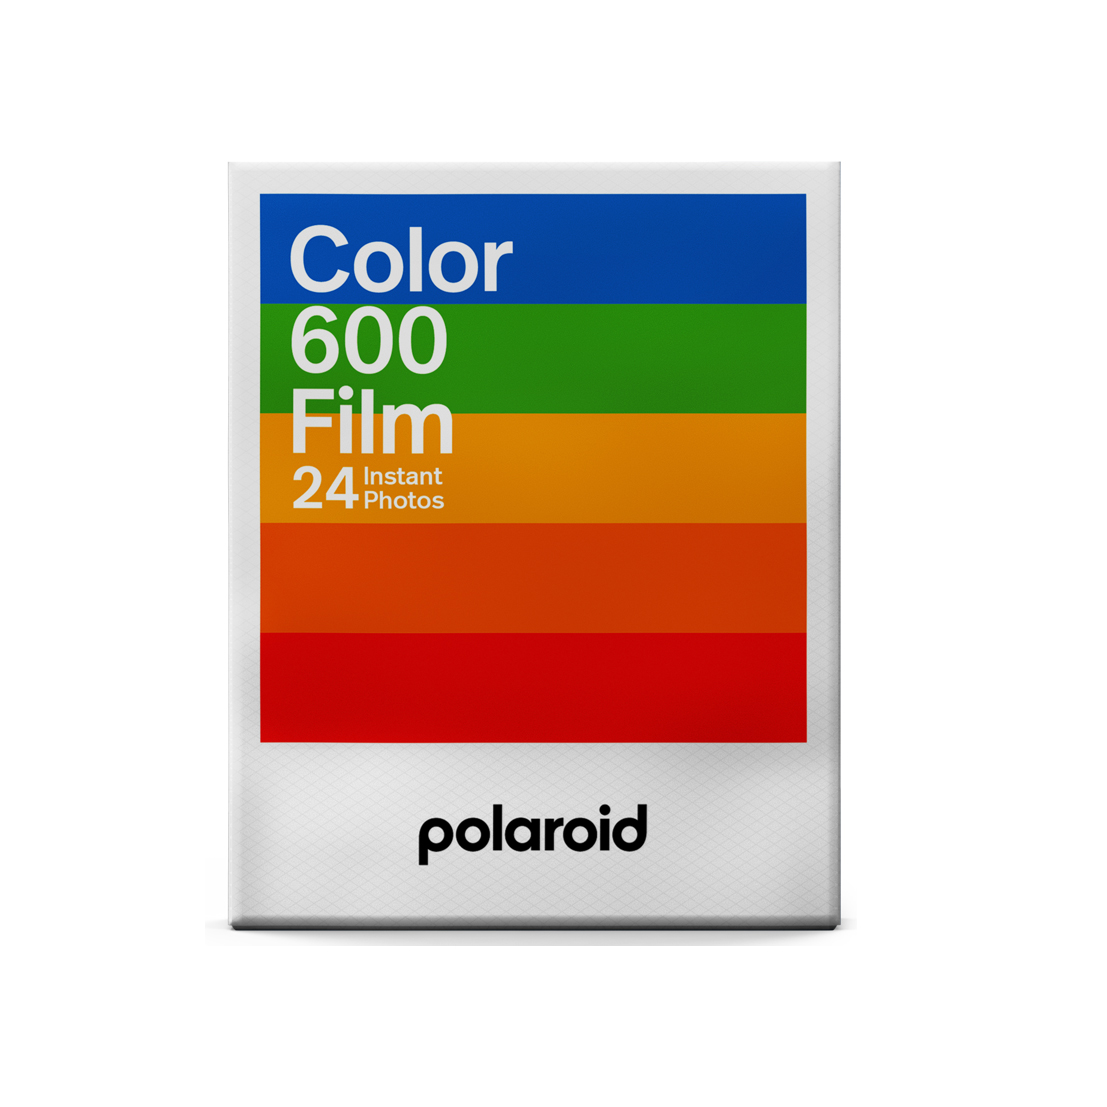 Wkład Polaroid COLOR 600 FILM - 24 zdjęcia